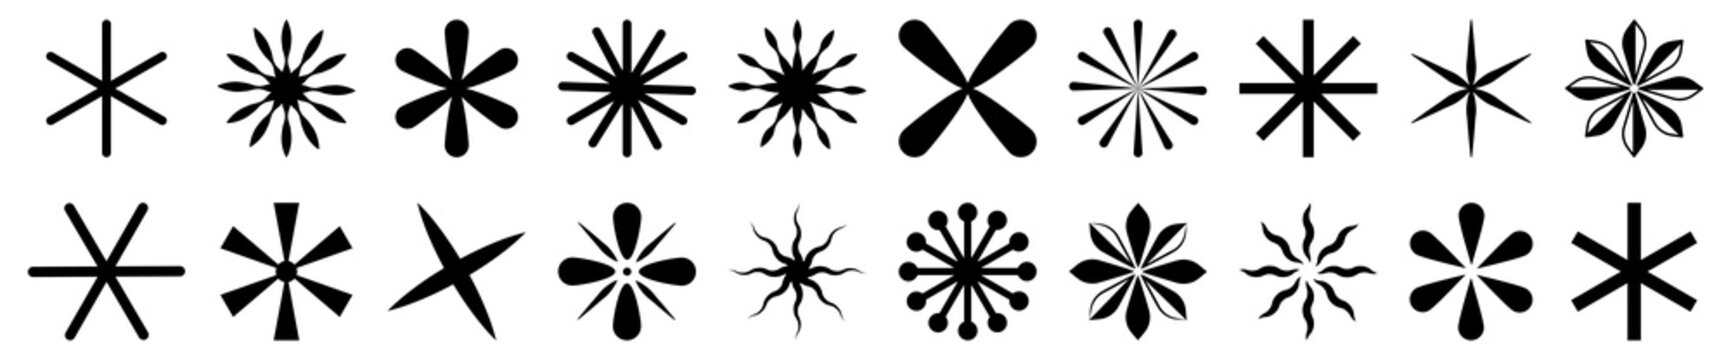 Asterisk icons set. Vector illustration isolated on white background